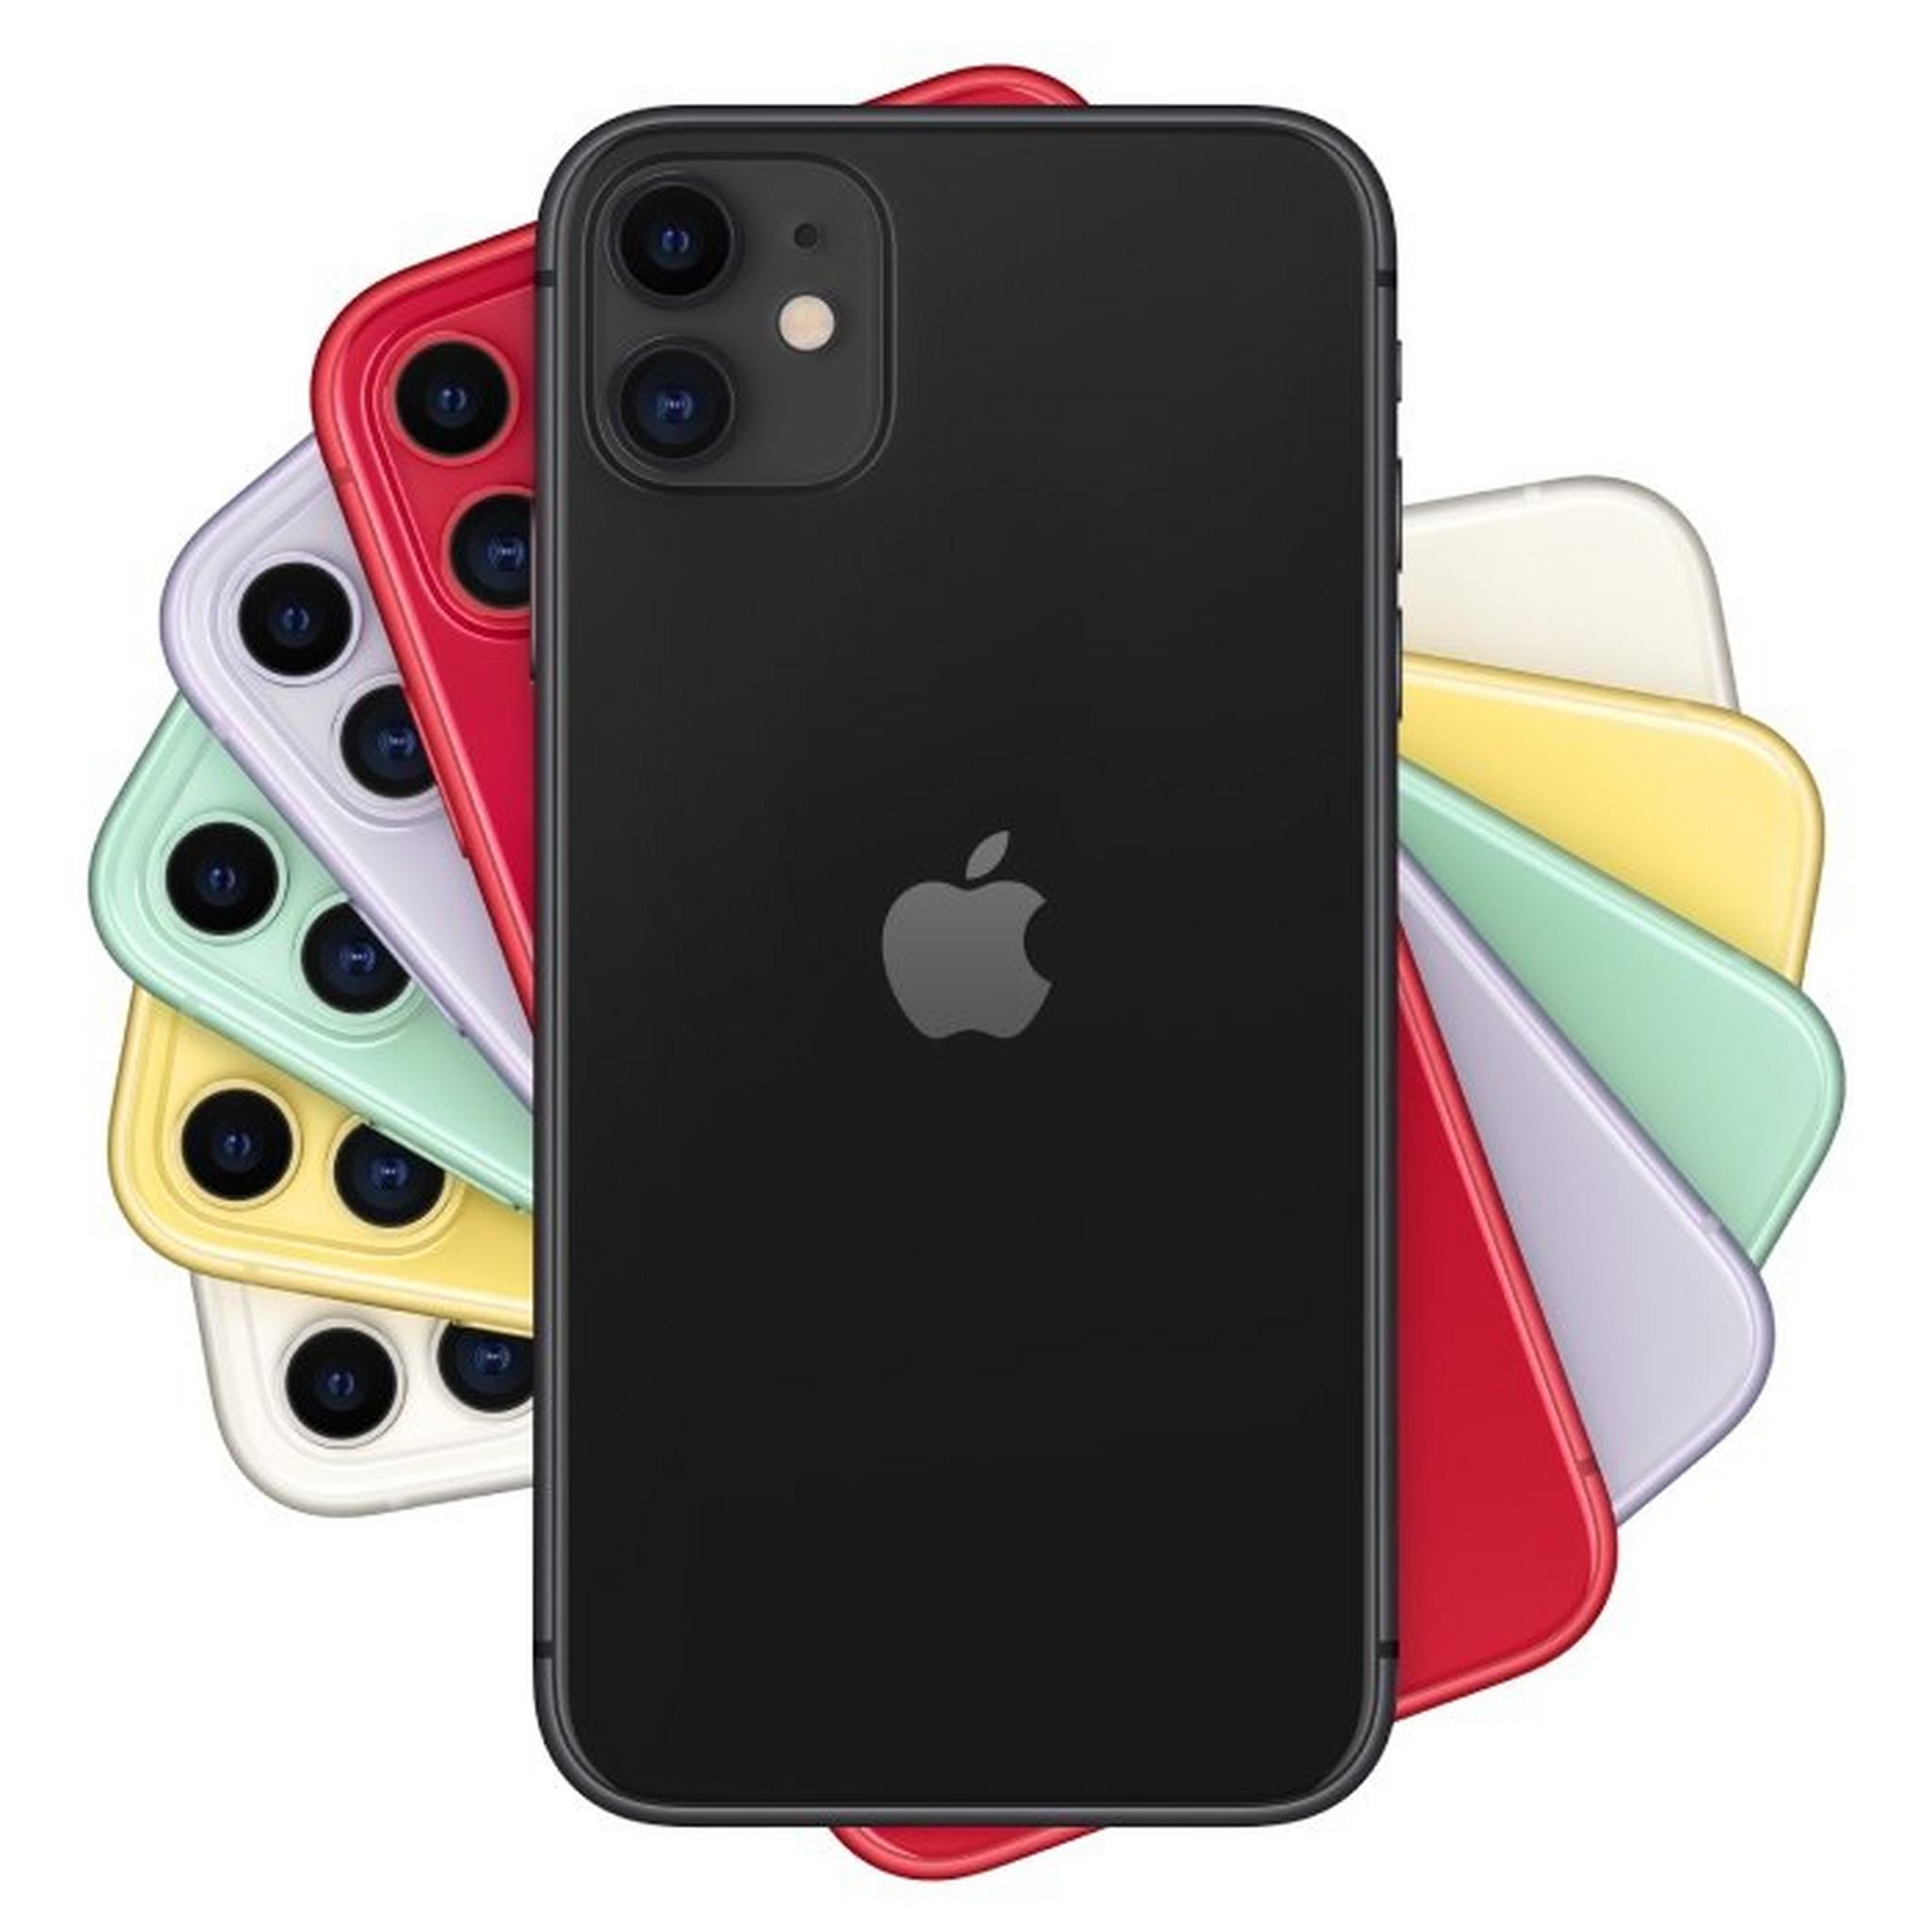 Apple iPhone 11 64GB Phone - Black